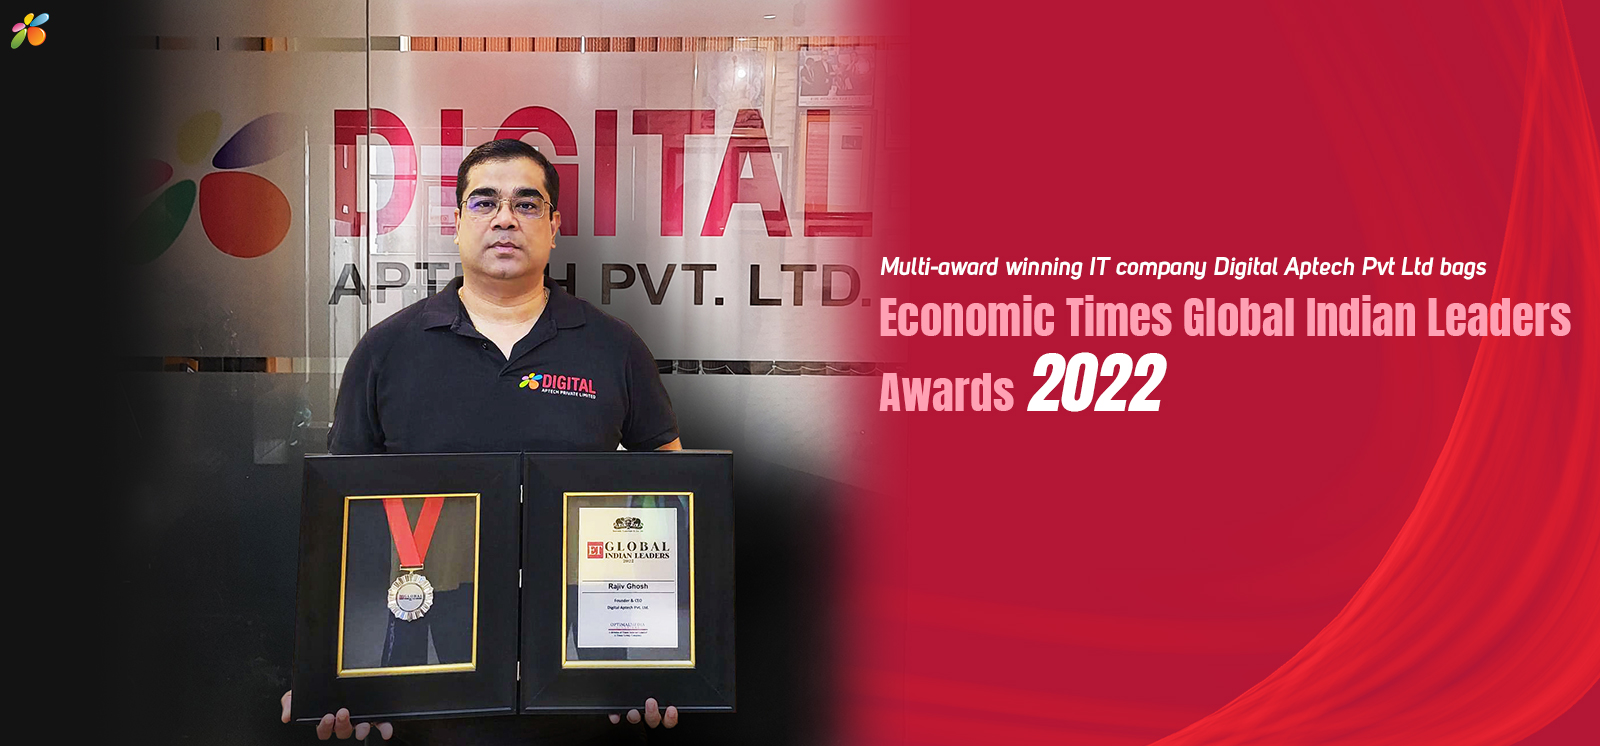 Multi-award winning IT company Digital Aptech Pvt Ltd bags Economic Times Global Indian Leaders Awards 2022